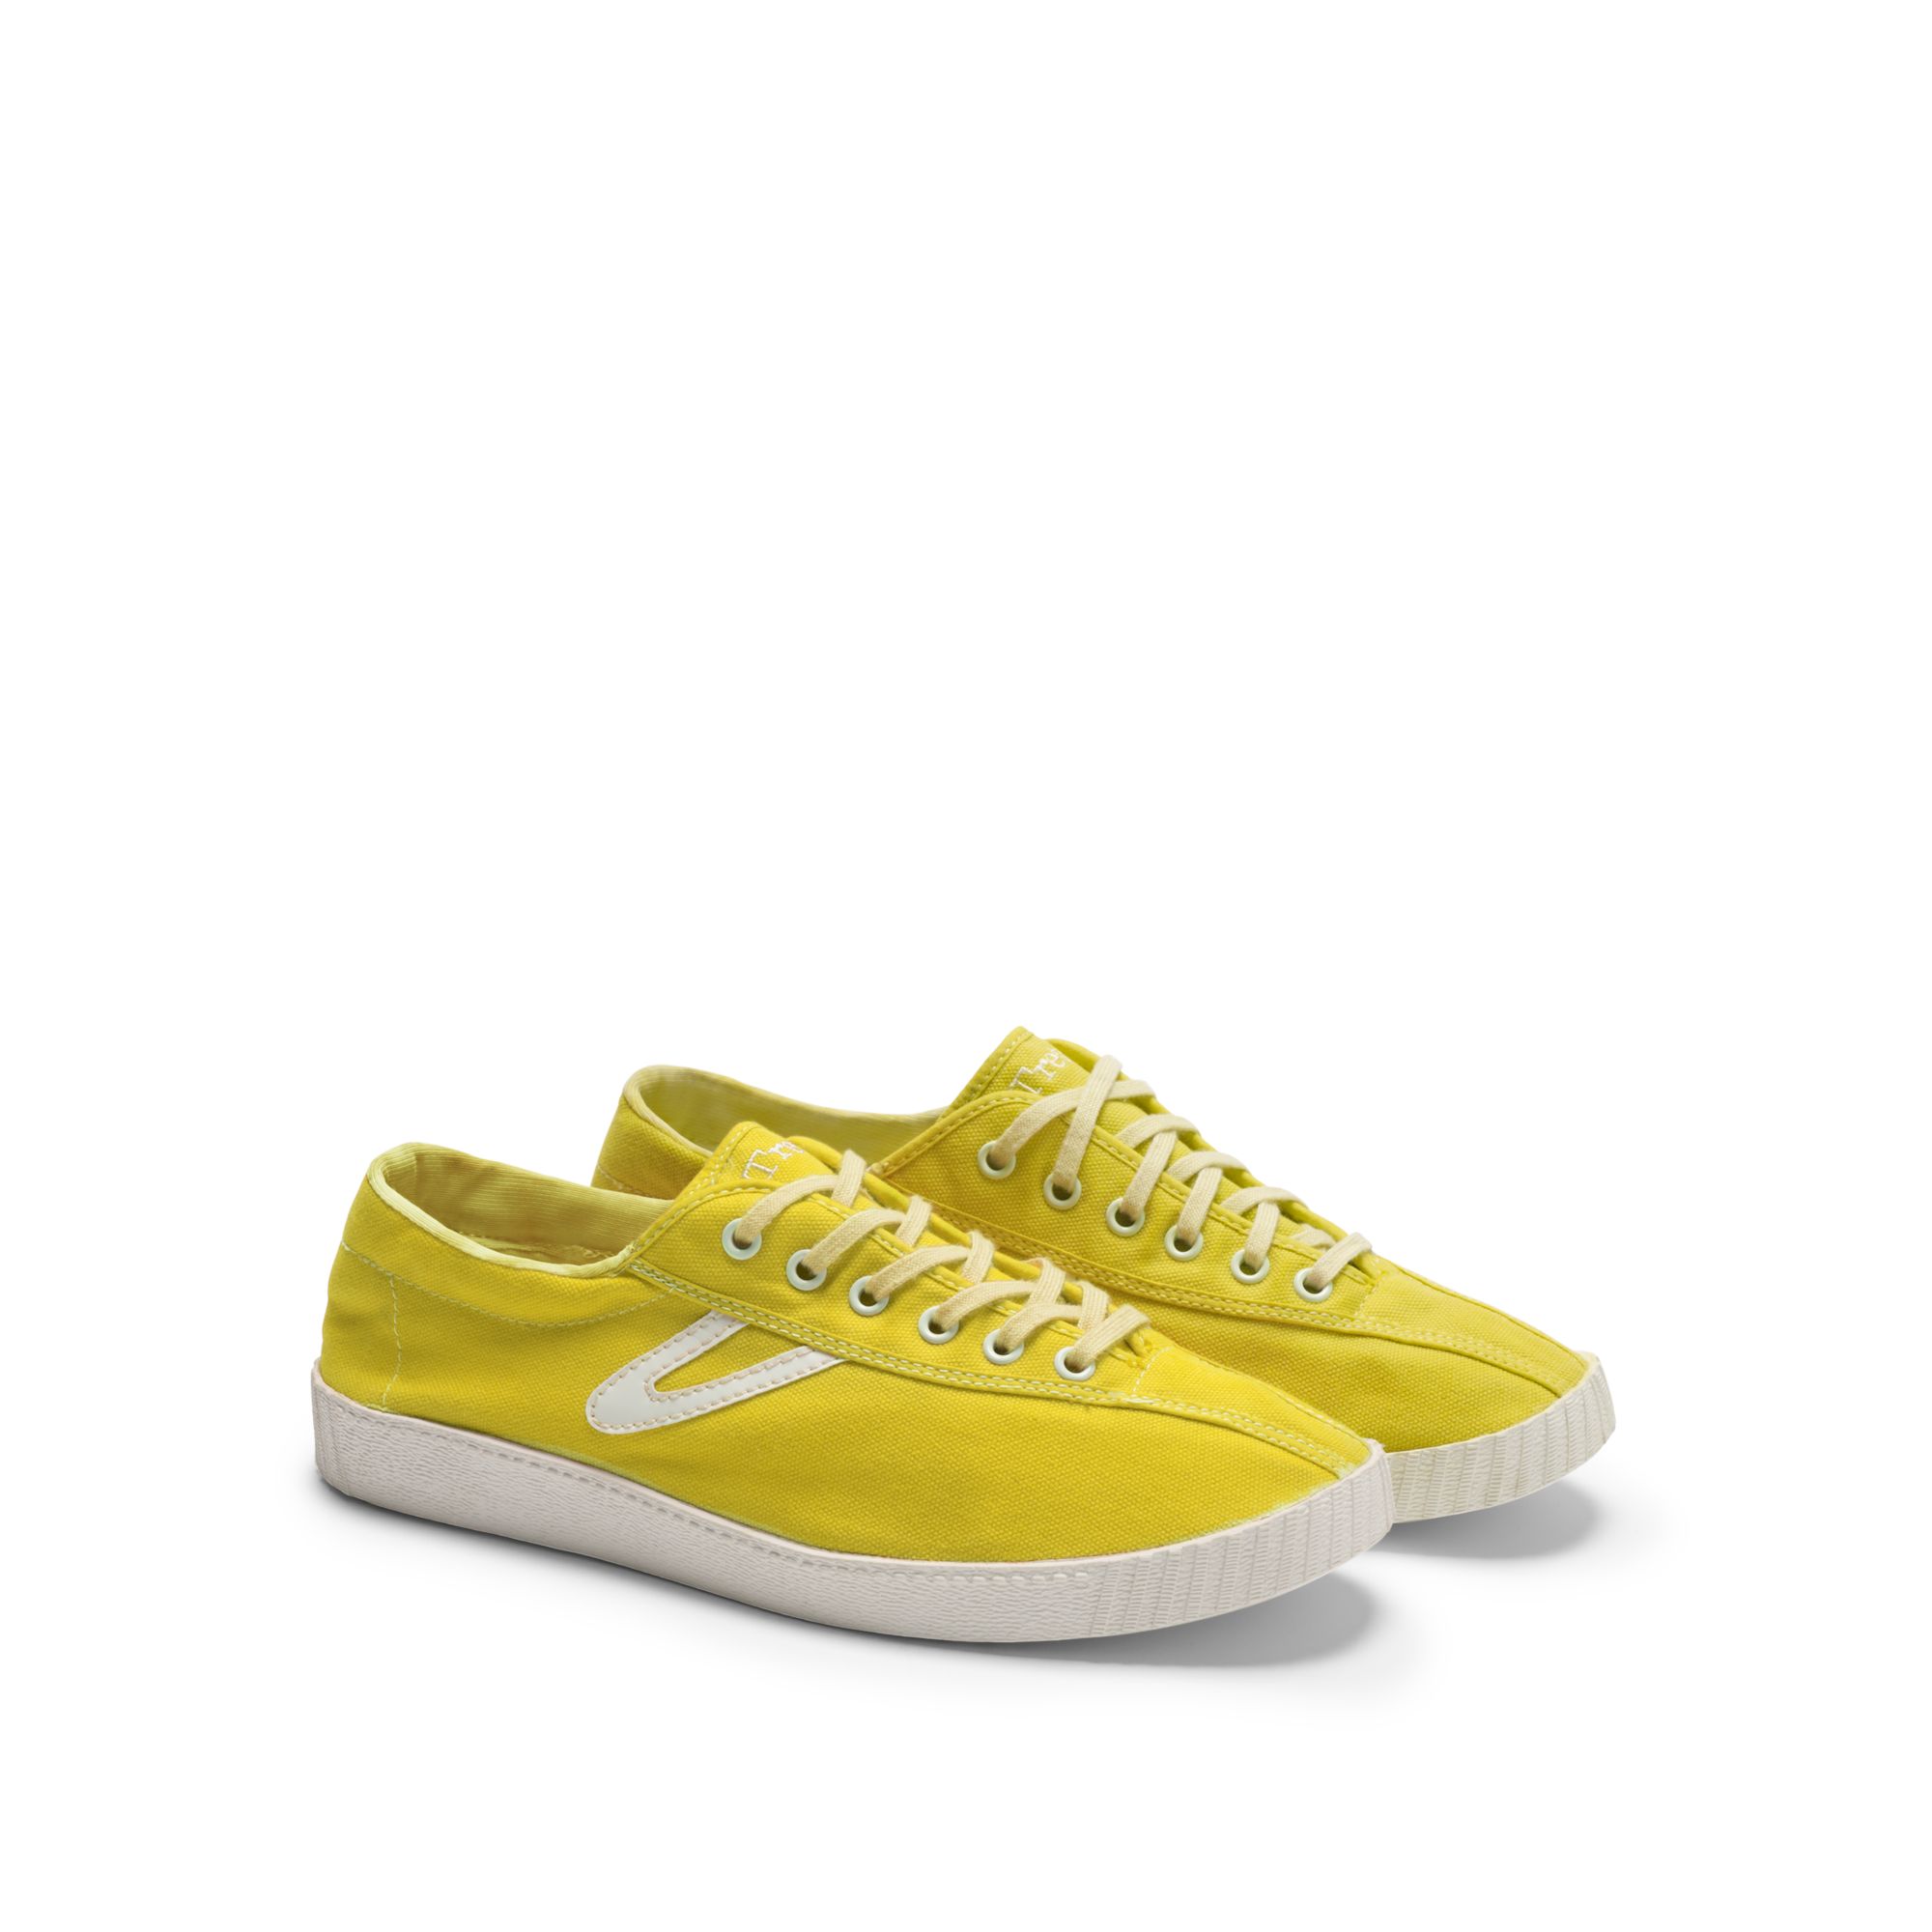 tretorn yellow sneakers